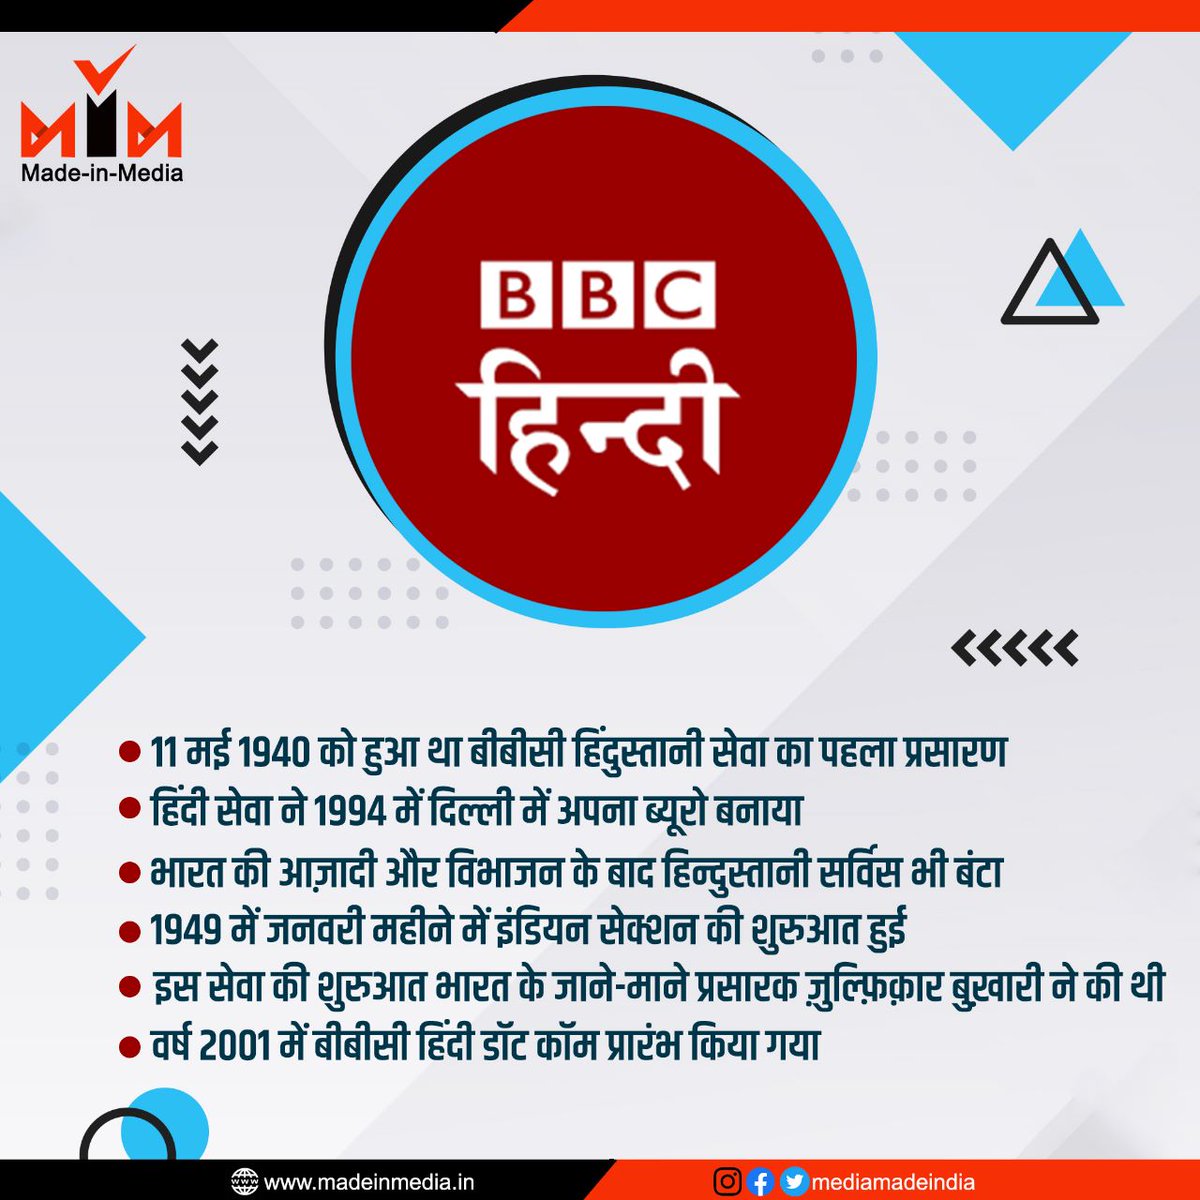 जानिये बीबीसी हिंदुस्तानी सेवा का प्रसारण कब हुआ था शुरू..@BBCHindi @BBChindiLIVE 
#MadeInMedia #BBChindi #histopry #journalism #Radio